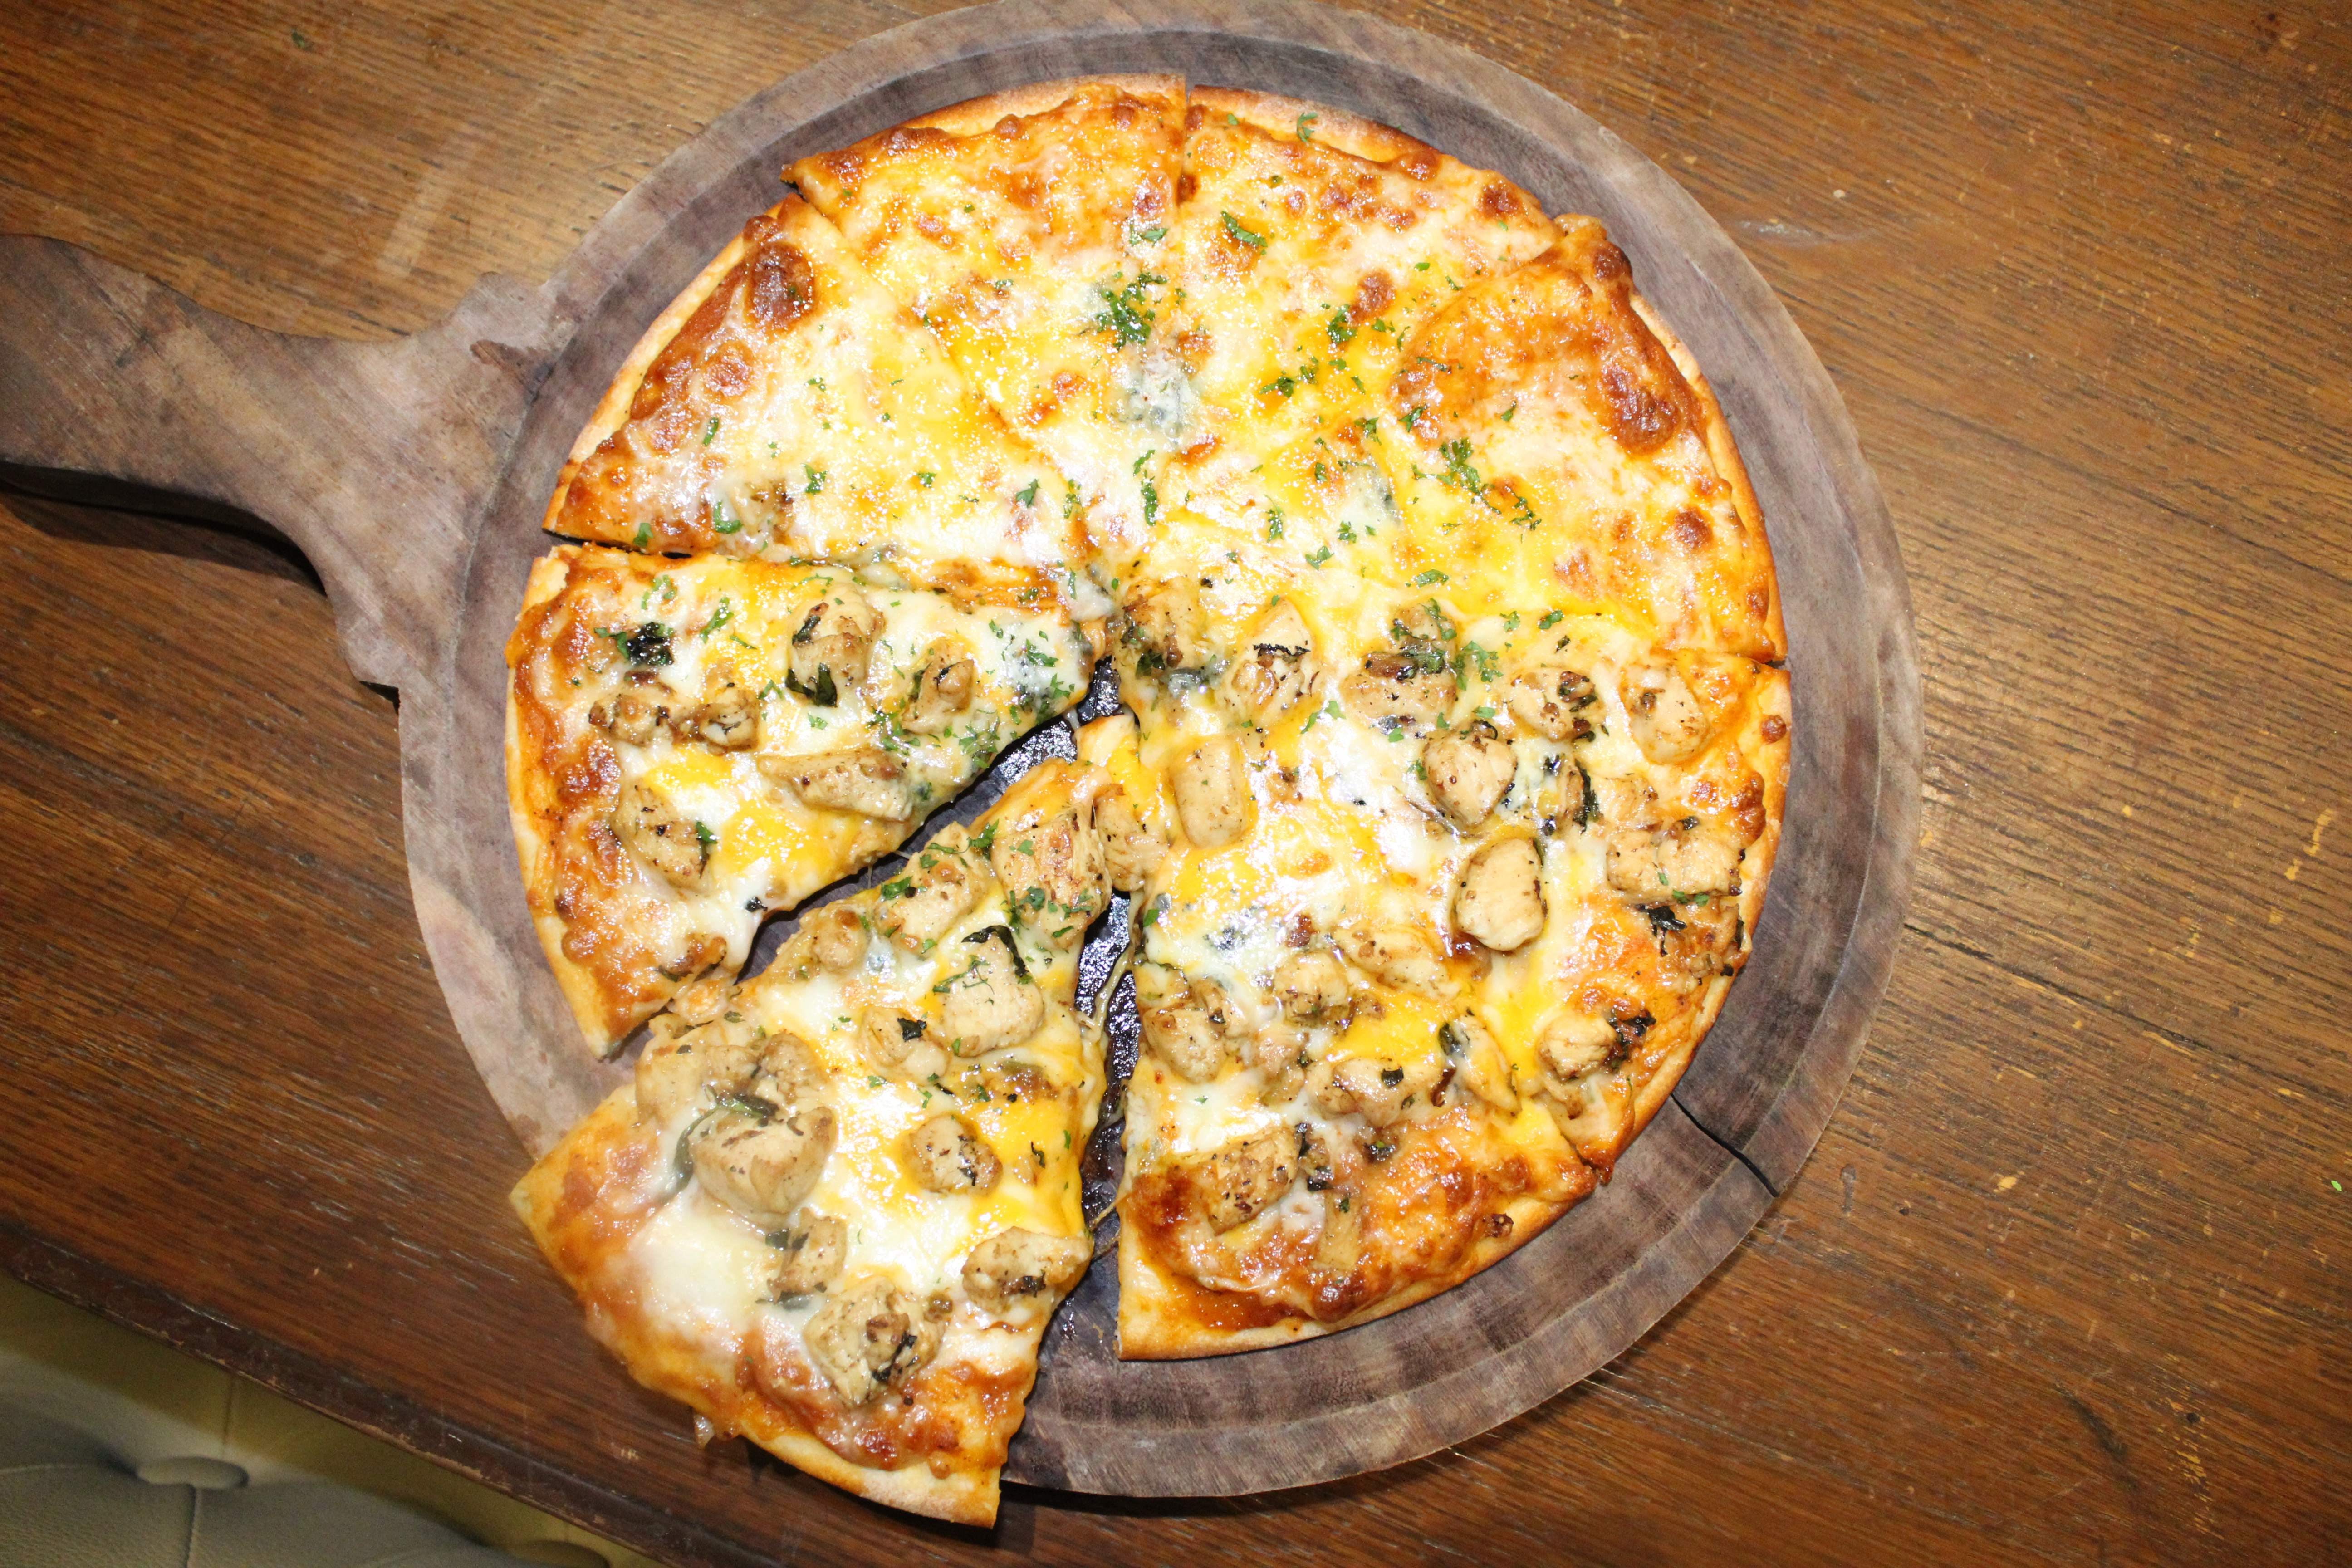 Dish,Food,Cuisine,Pizza cheese,Pizza,Ingredient,Zwiebelkuchen,Quiche,California-style pizza,Tarte flambée